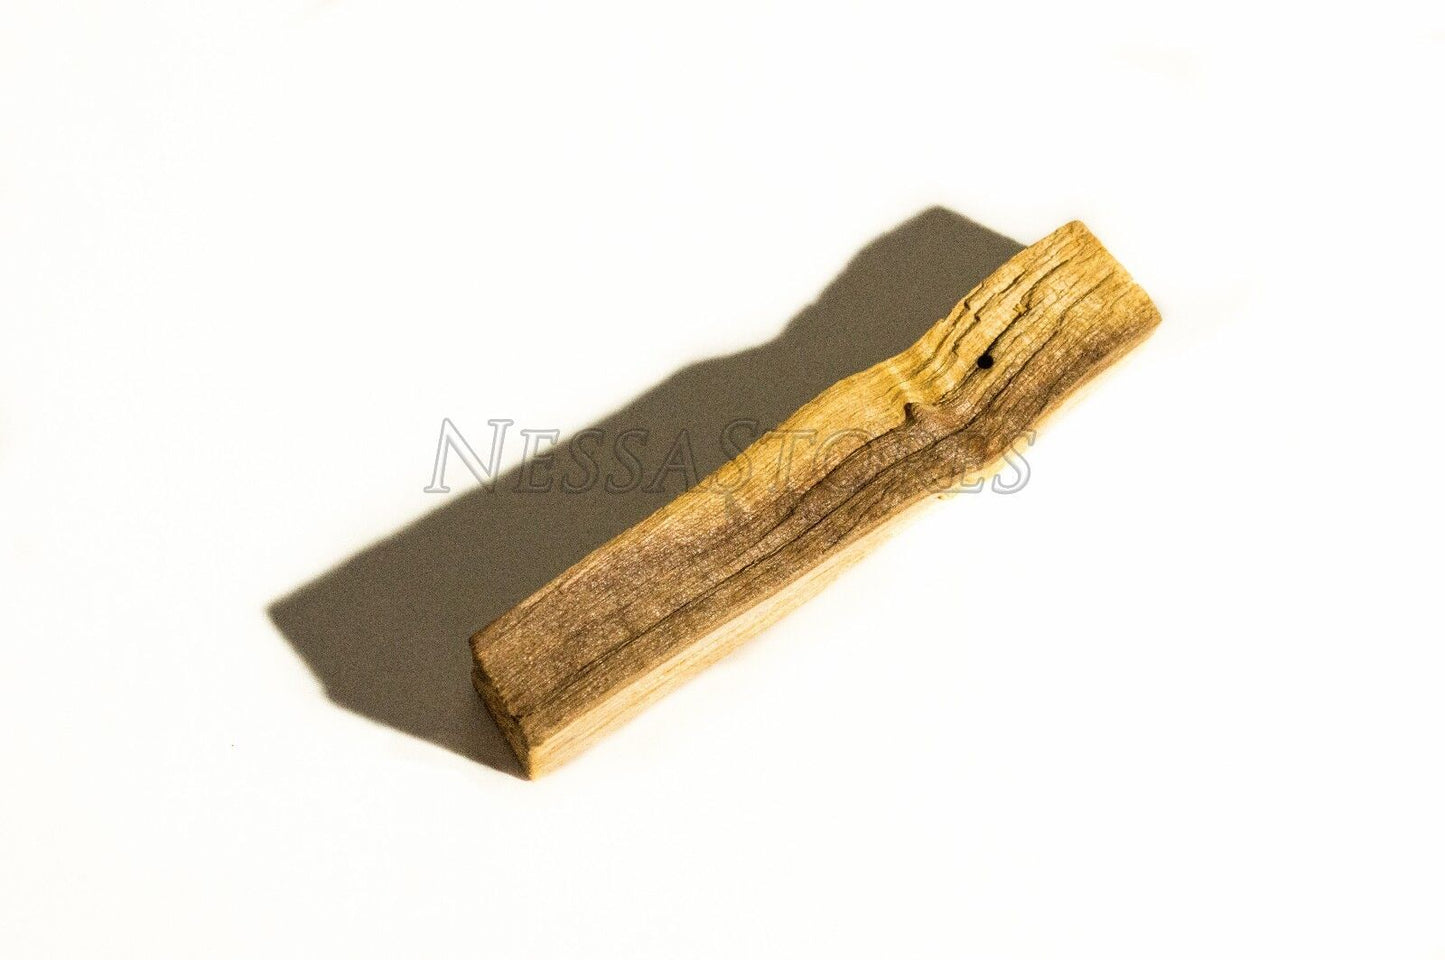 NessaStores Palo Santo Holy Wood Incense Sticks Peruvian ( 5 pcs) #JC-65